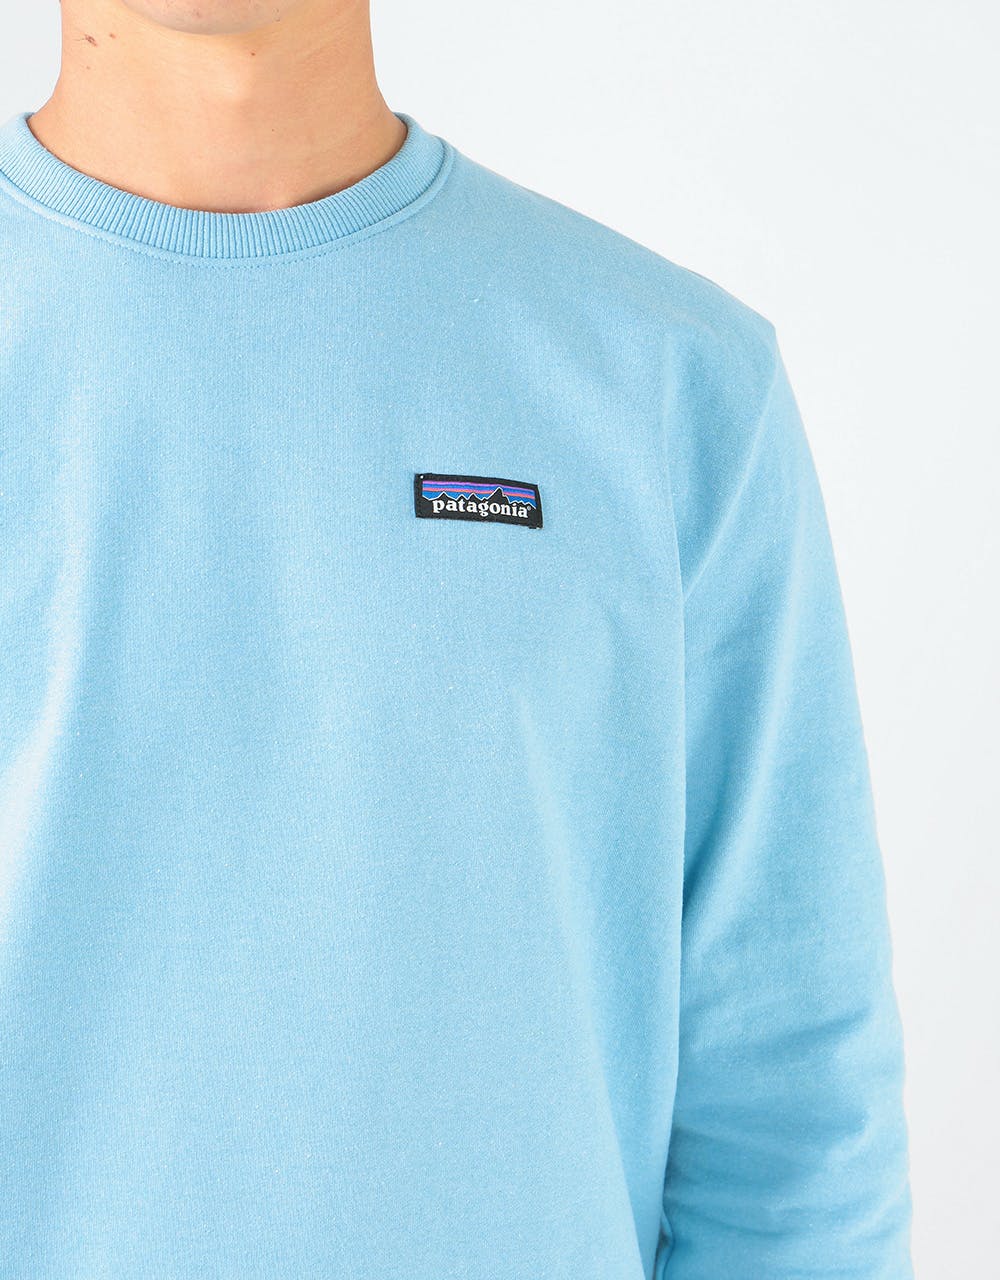 Patagonia P-6 Label Uprisal Crew Sweatshirt - Break Up Blue